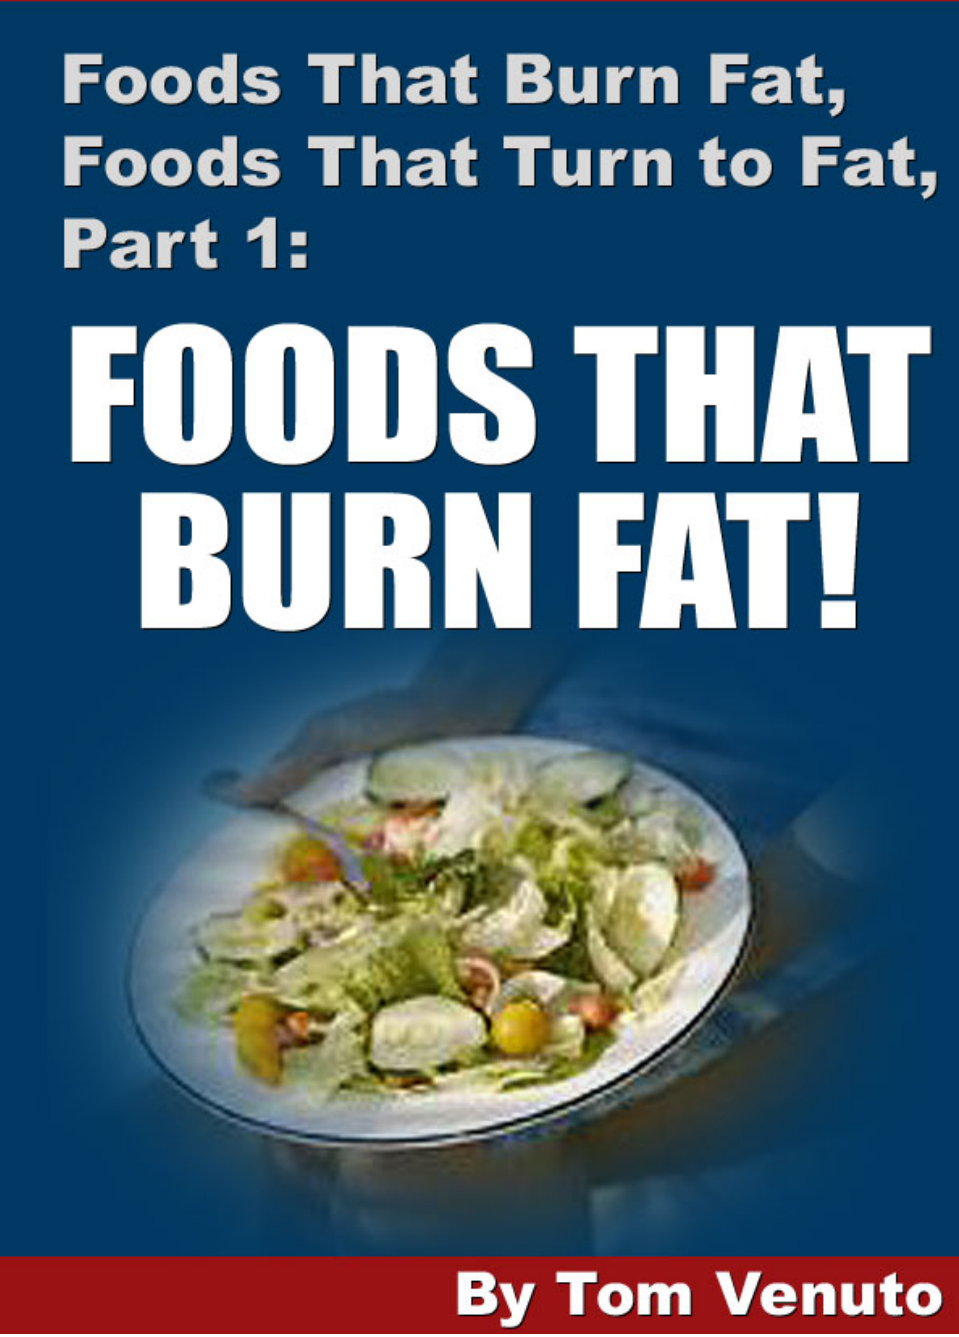 Foods That Burn FAT